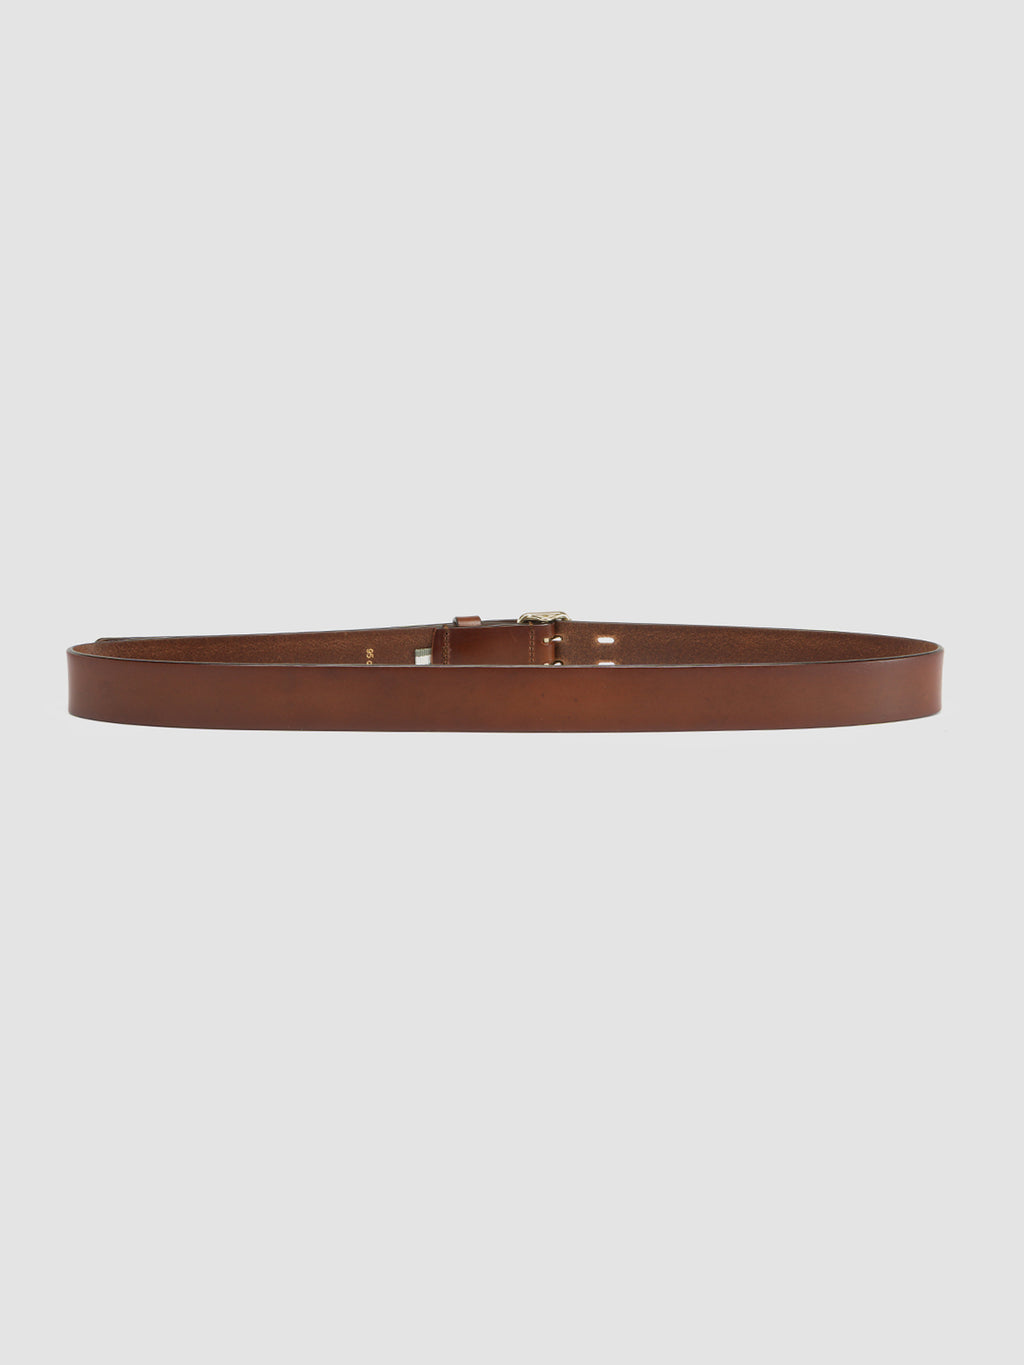 OC STRIP 051 - Brown Leather Belt  Officine Creative - 3